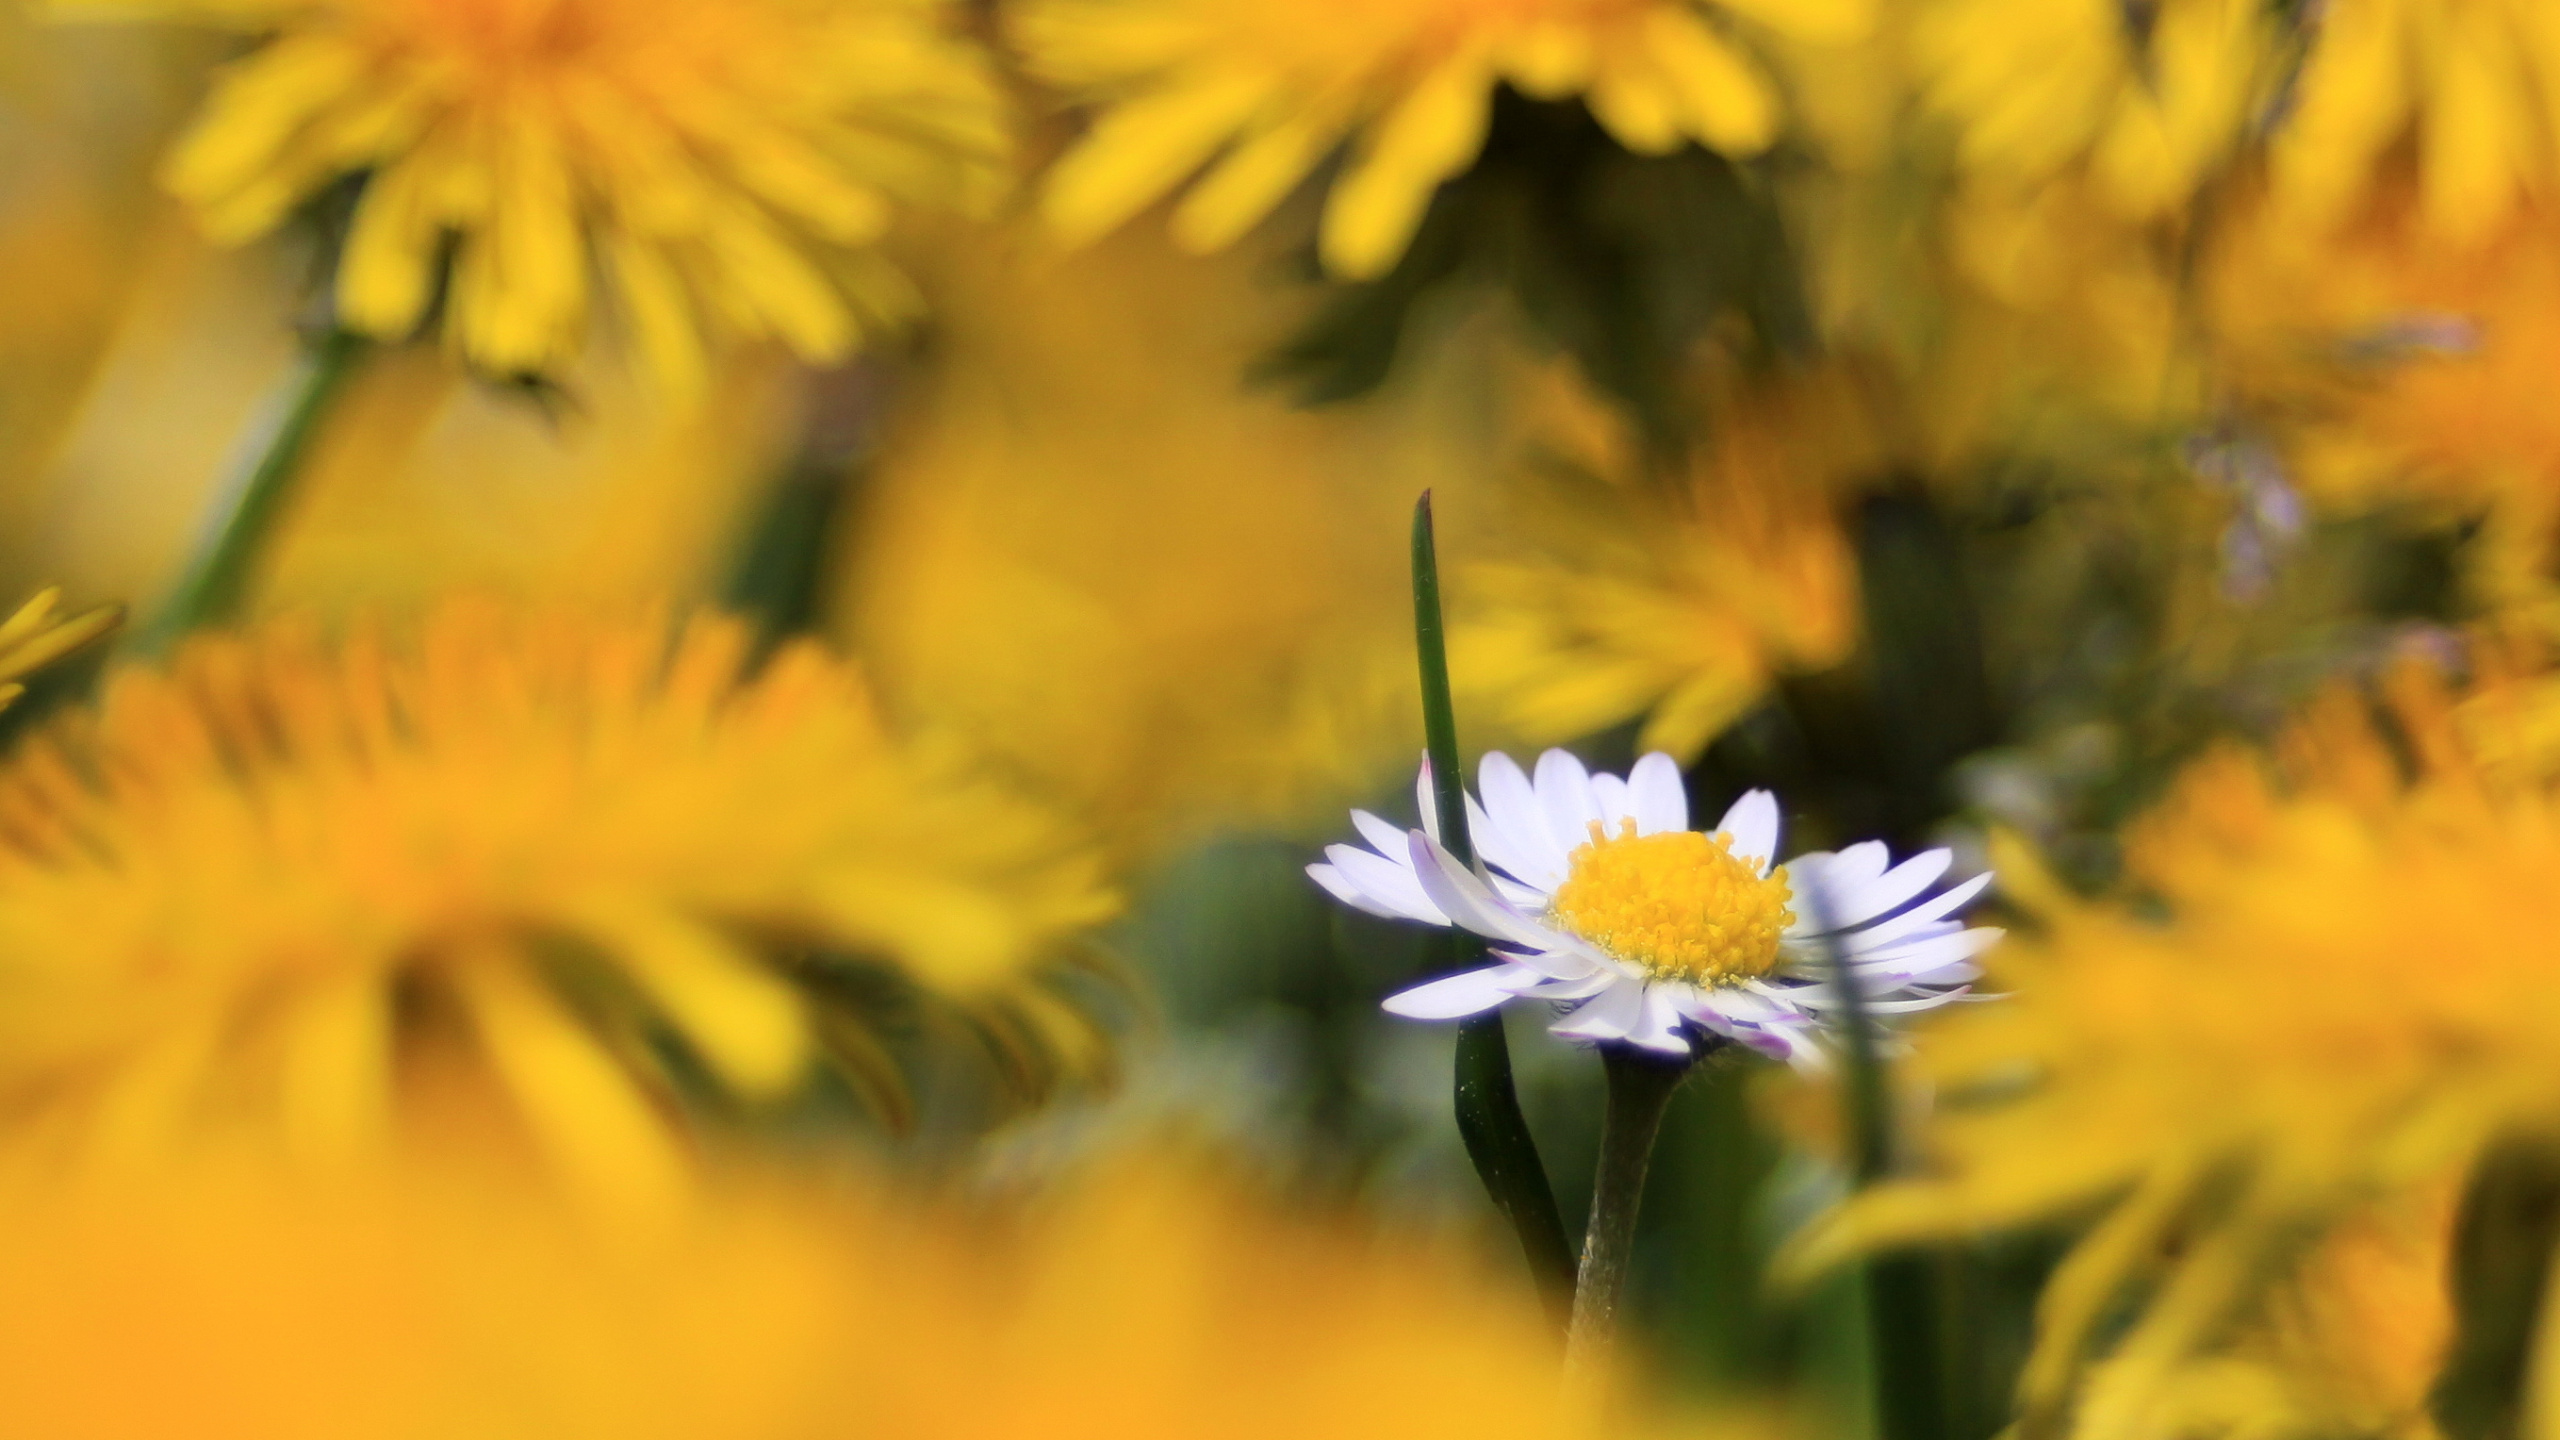 Yellow and White Flowers in Tilt Shift Lens. Wallpaper in 2560x1440 Resolution